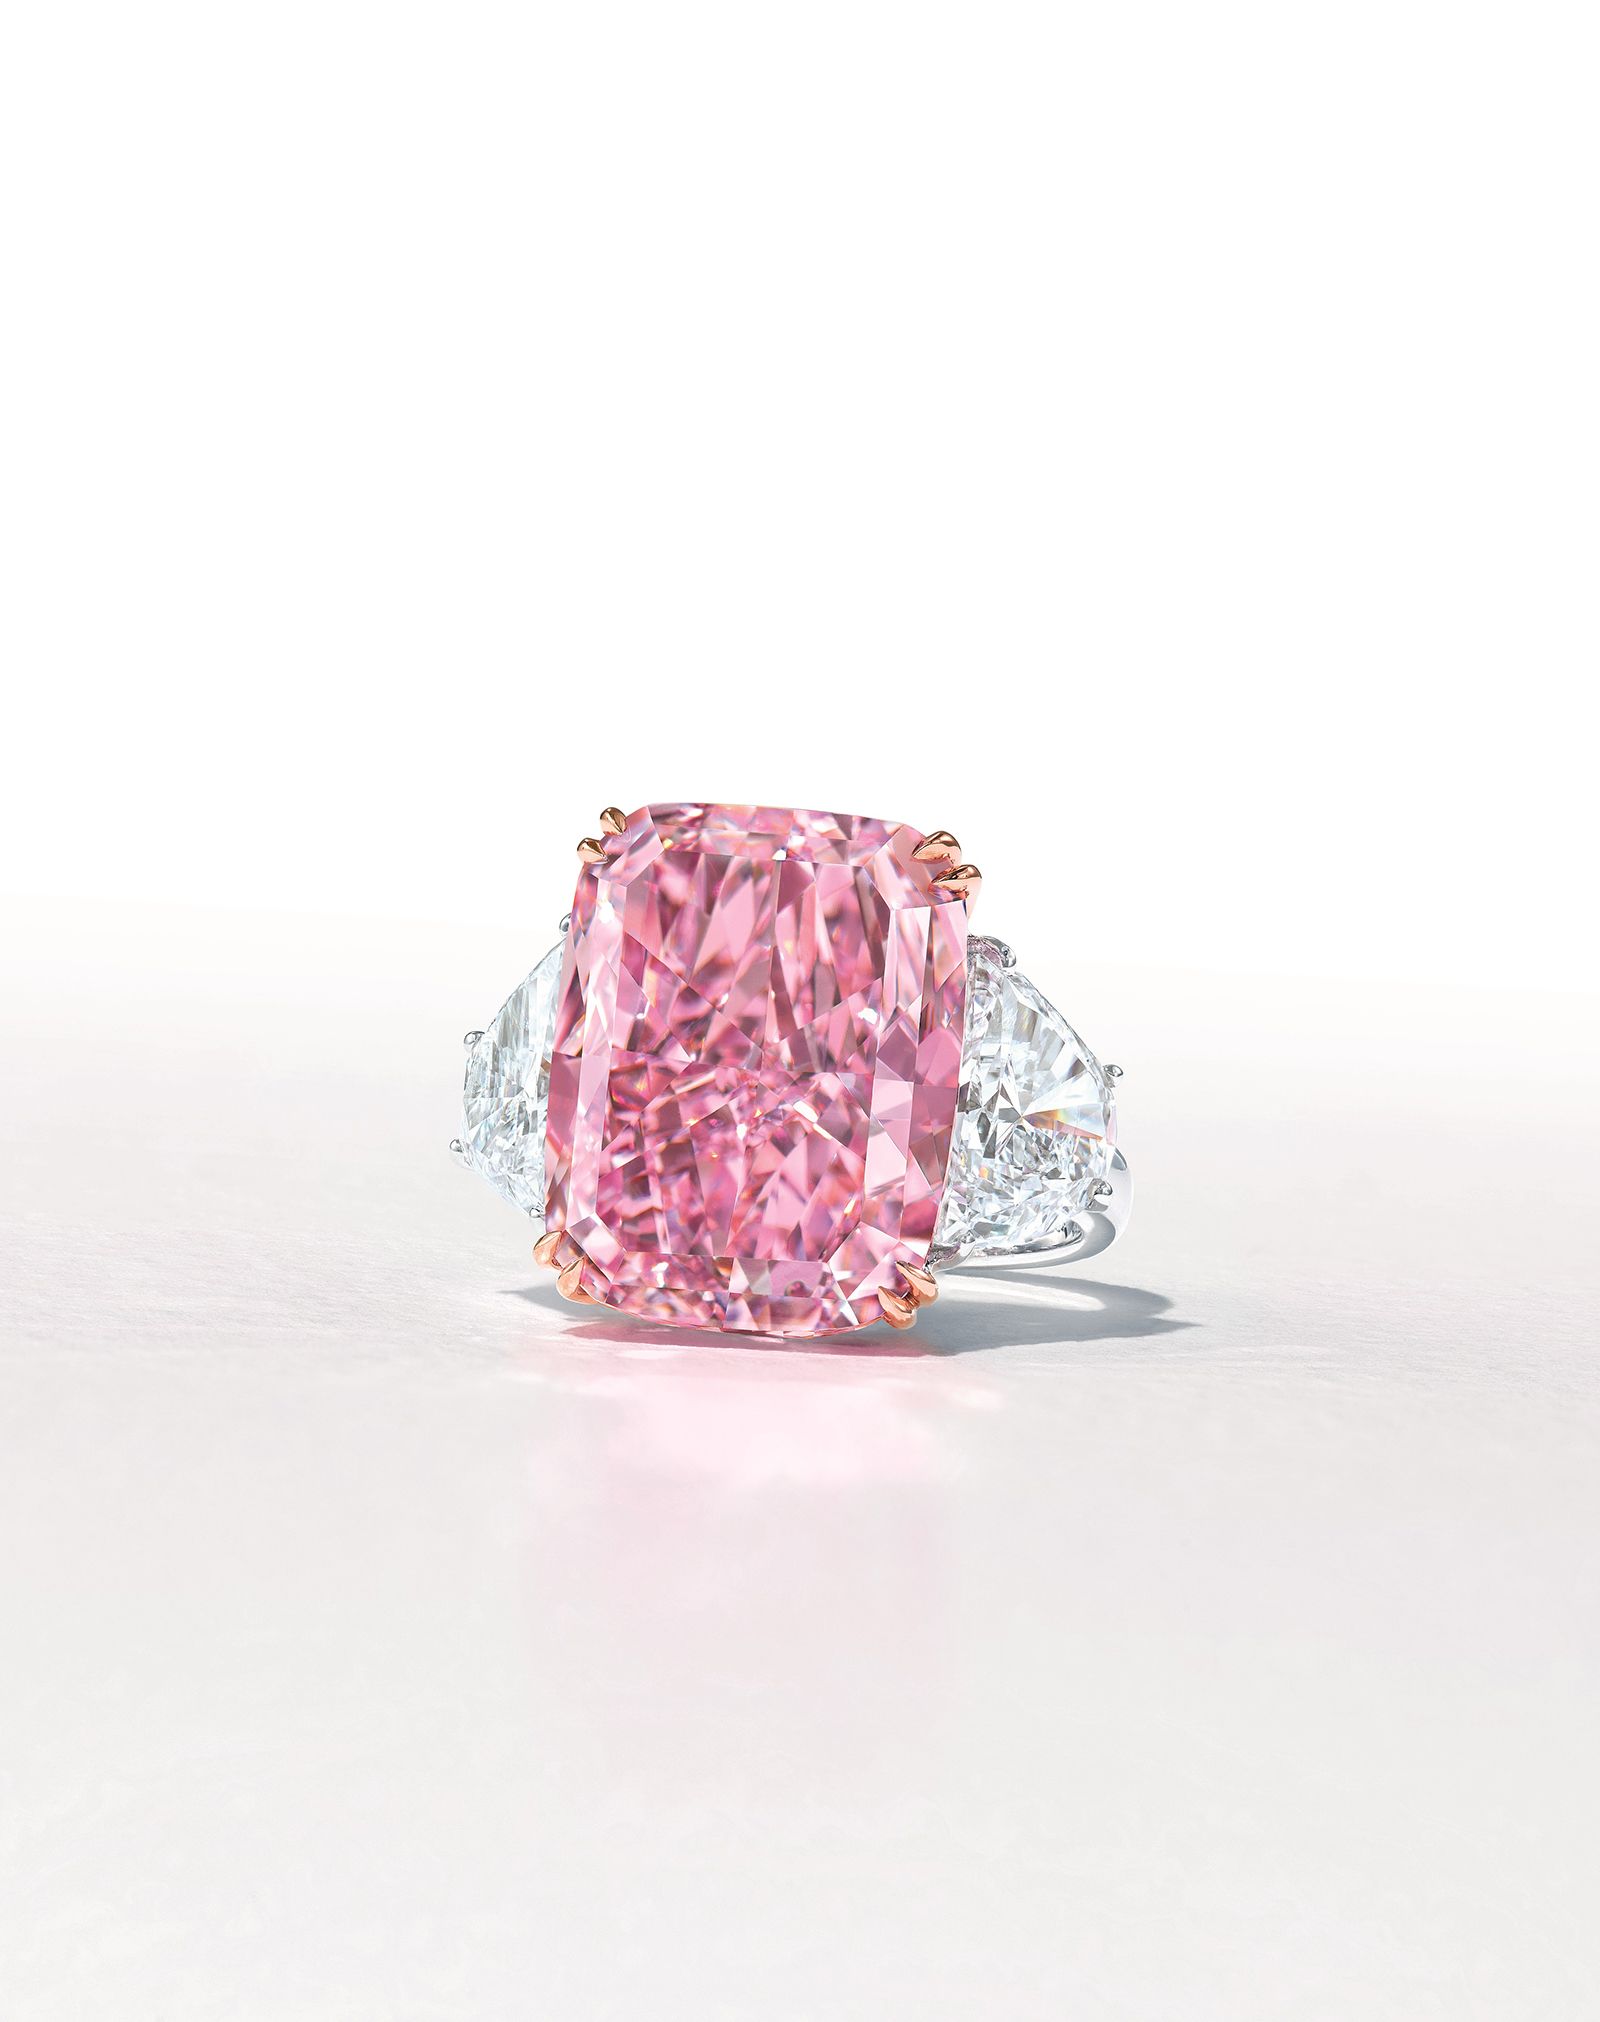 The Sakura: 'Flawless' purple-pink diamond fetches record $29.3M